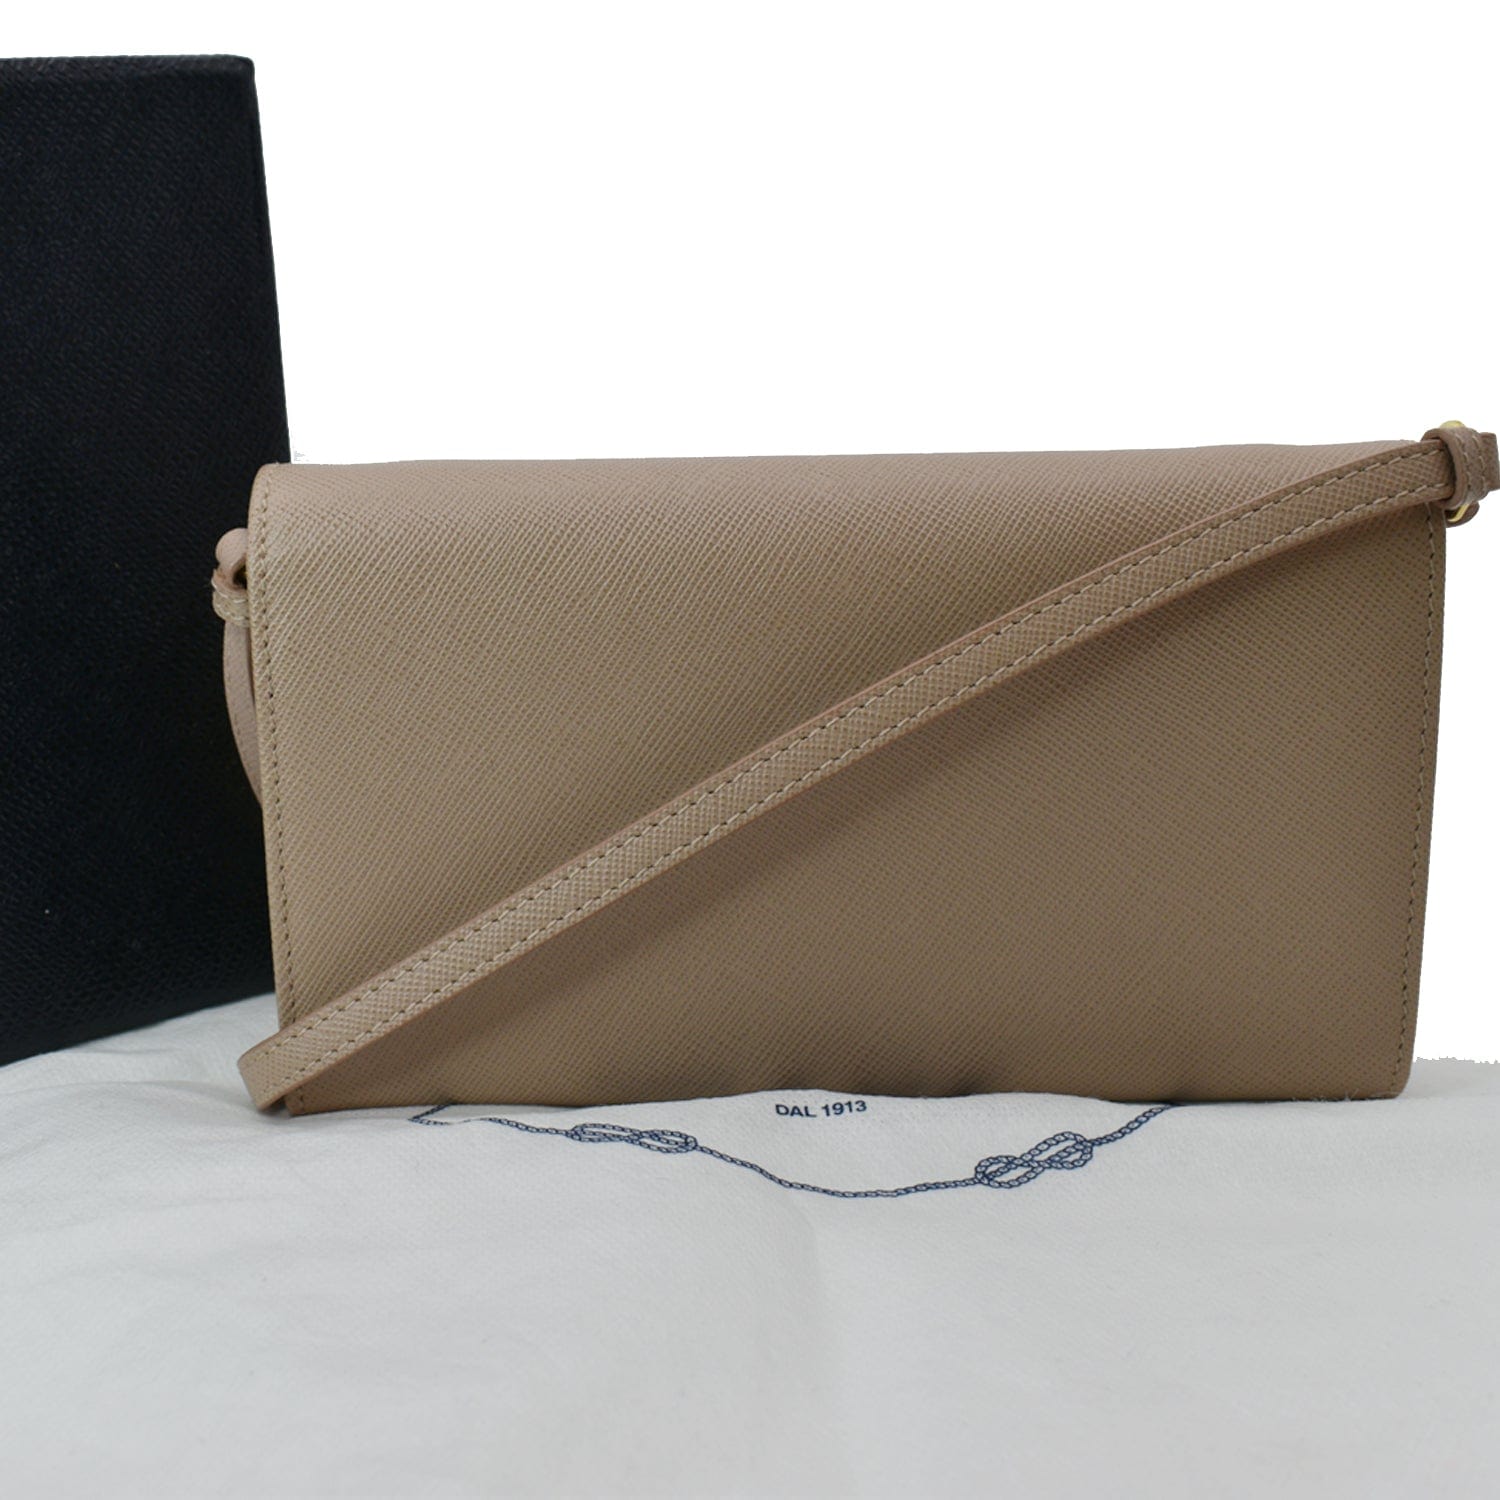 Prada Mini Saffiano Leather Strap Crossbody Bag Natural